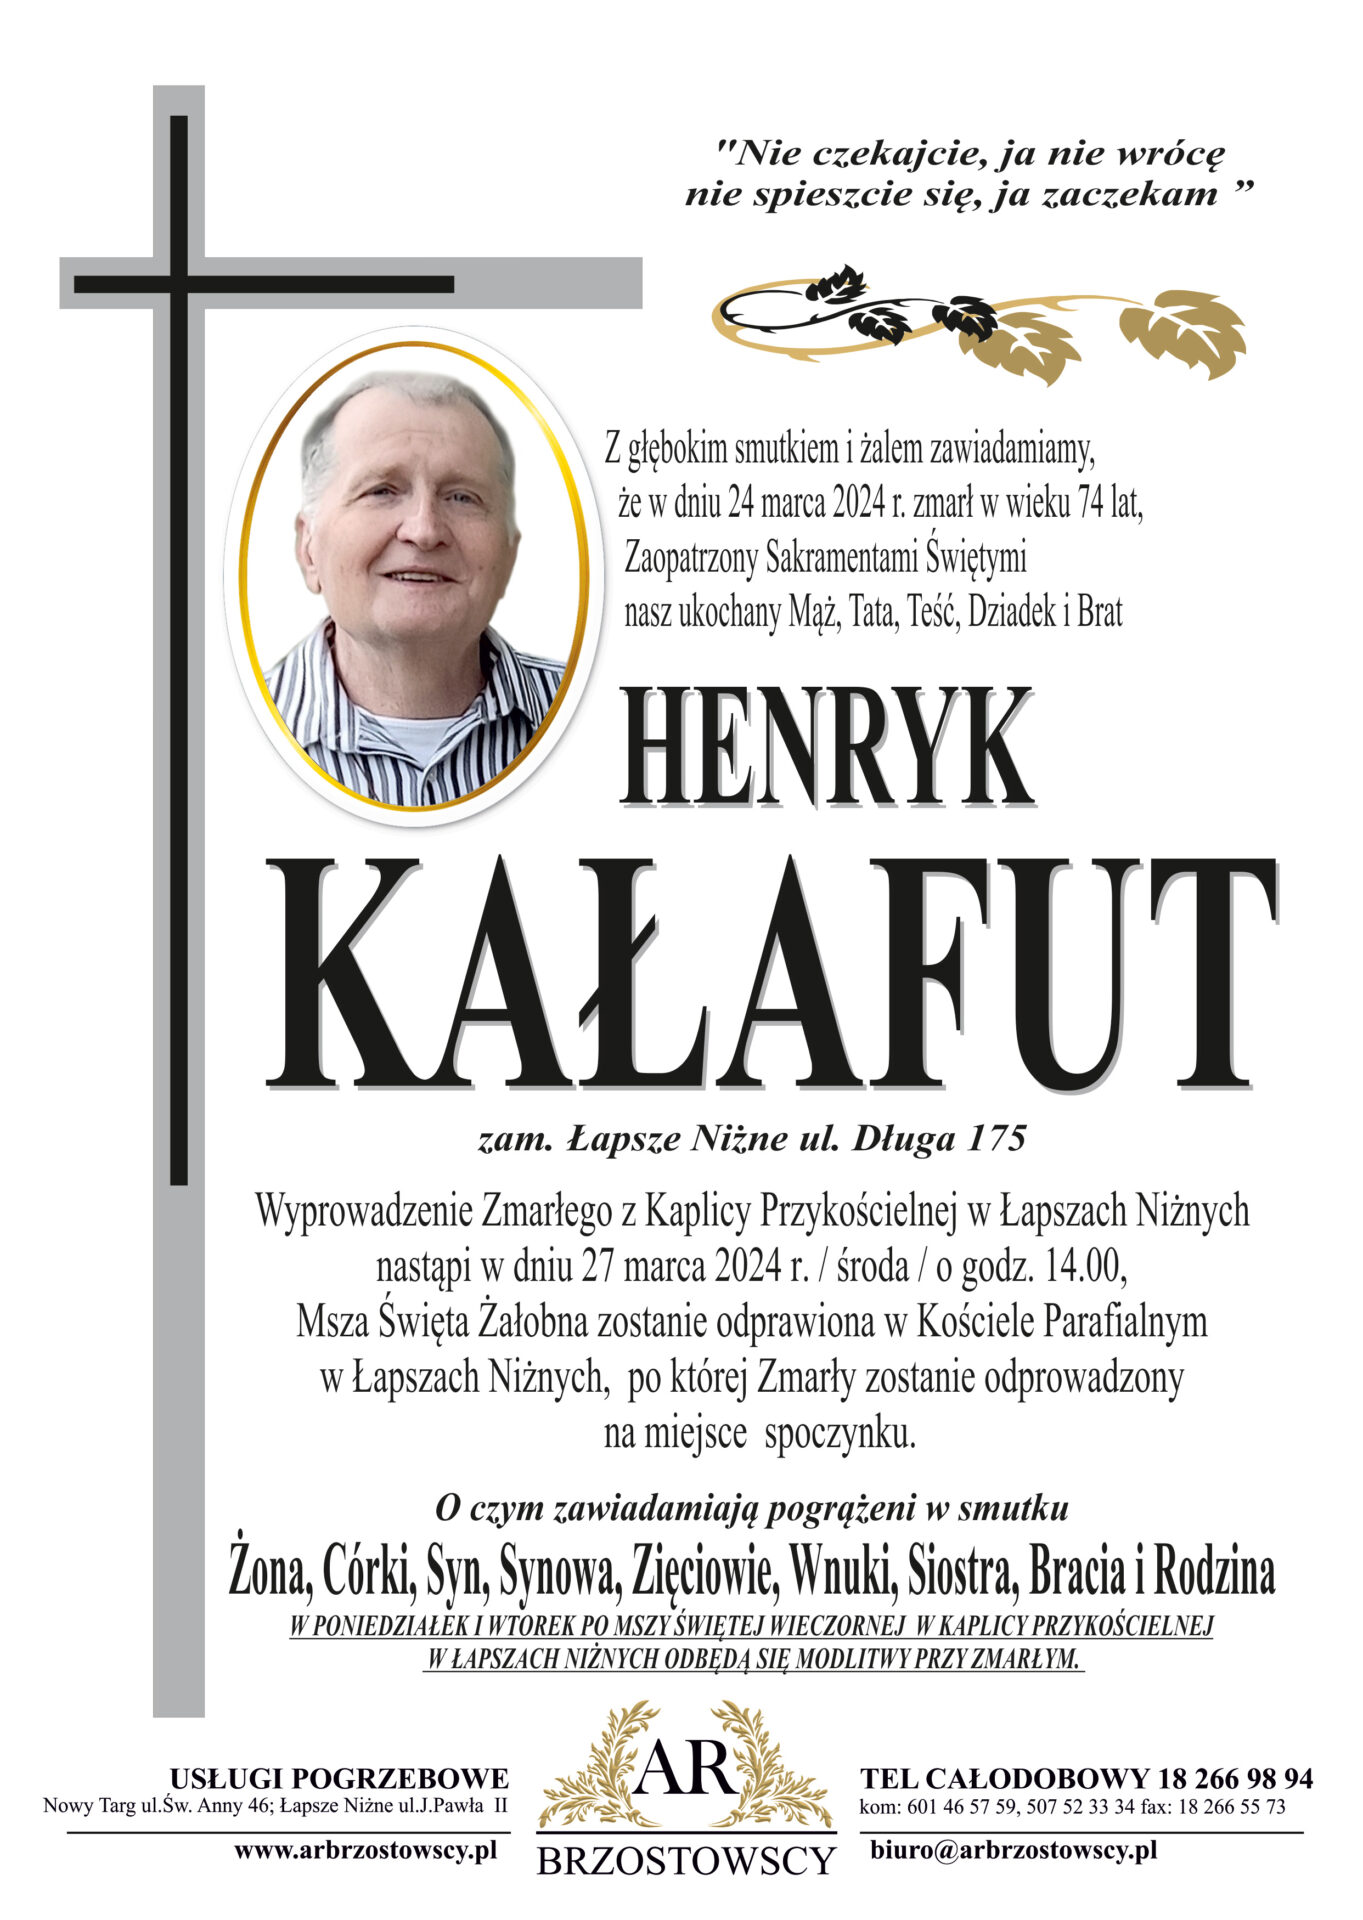 Henryk Kałafut